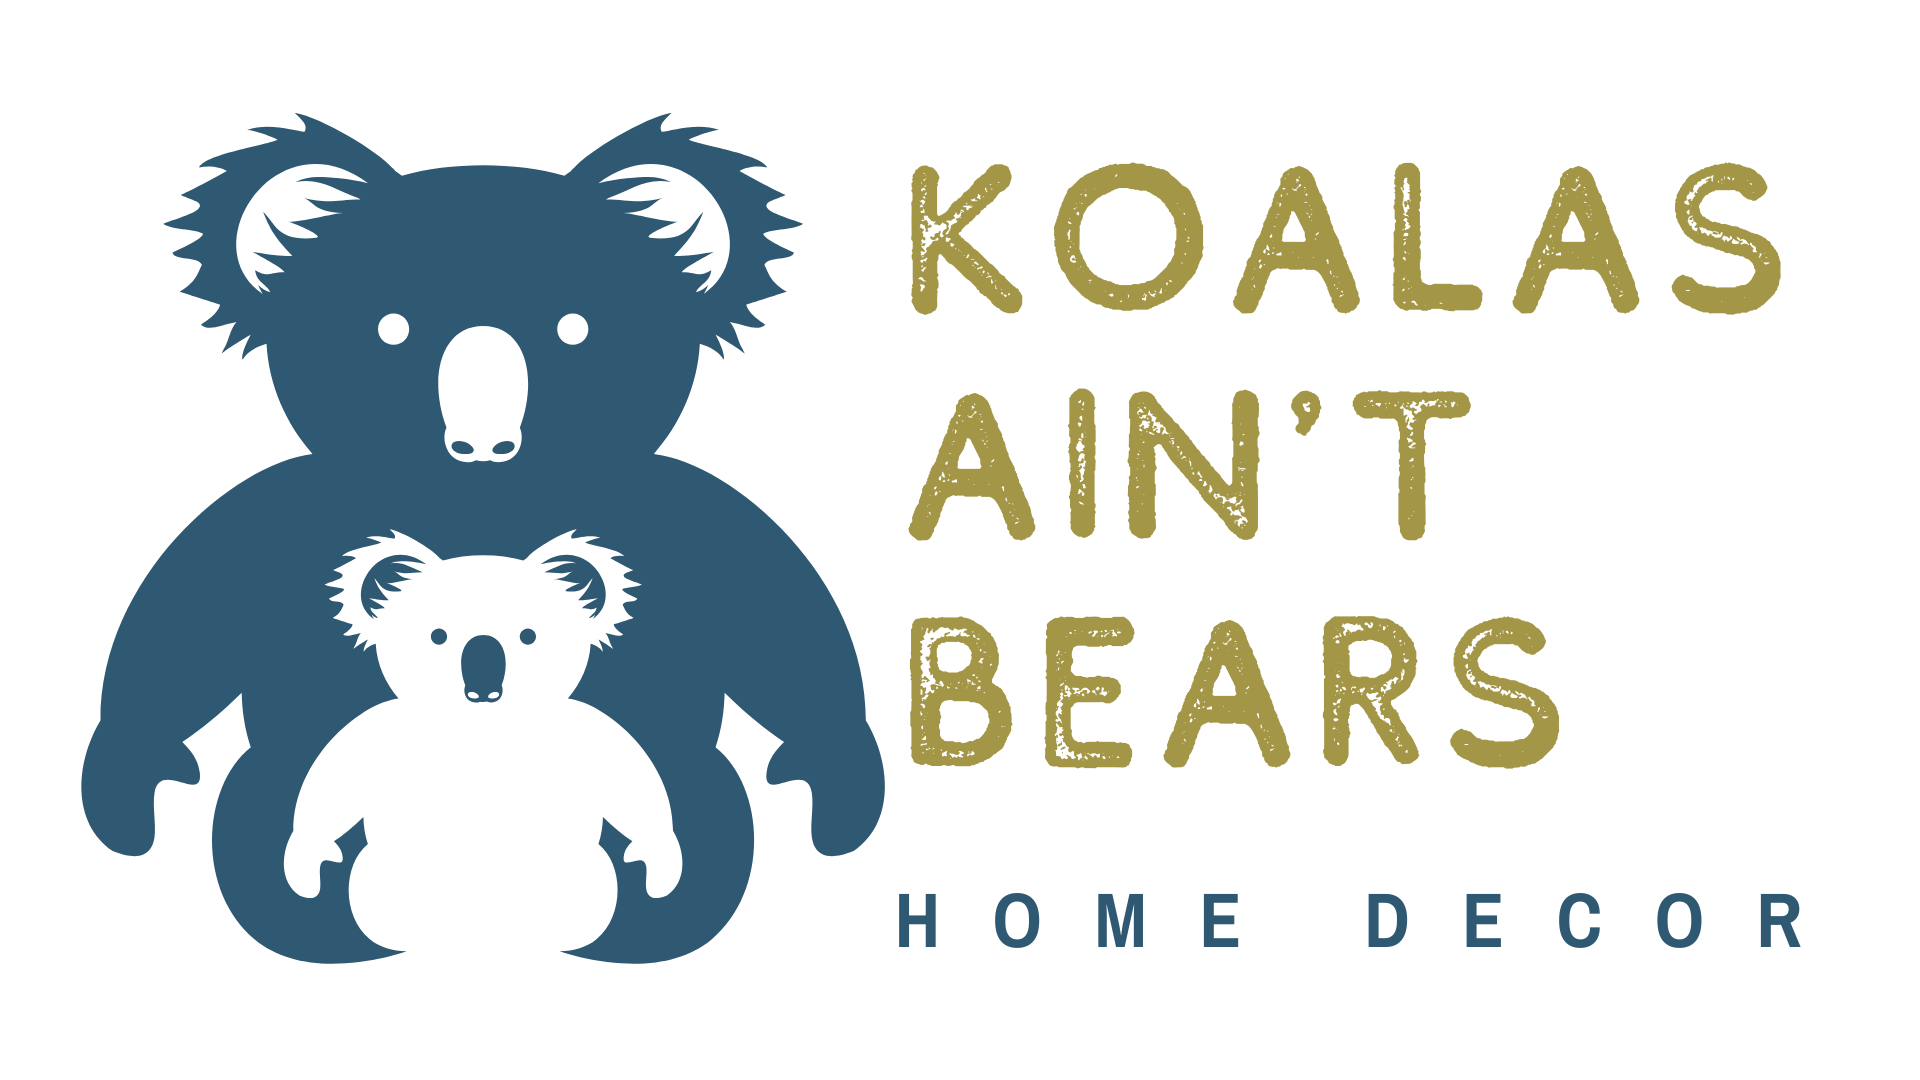 Koalas ain't Bears